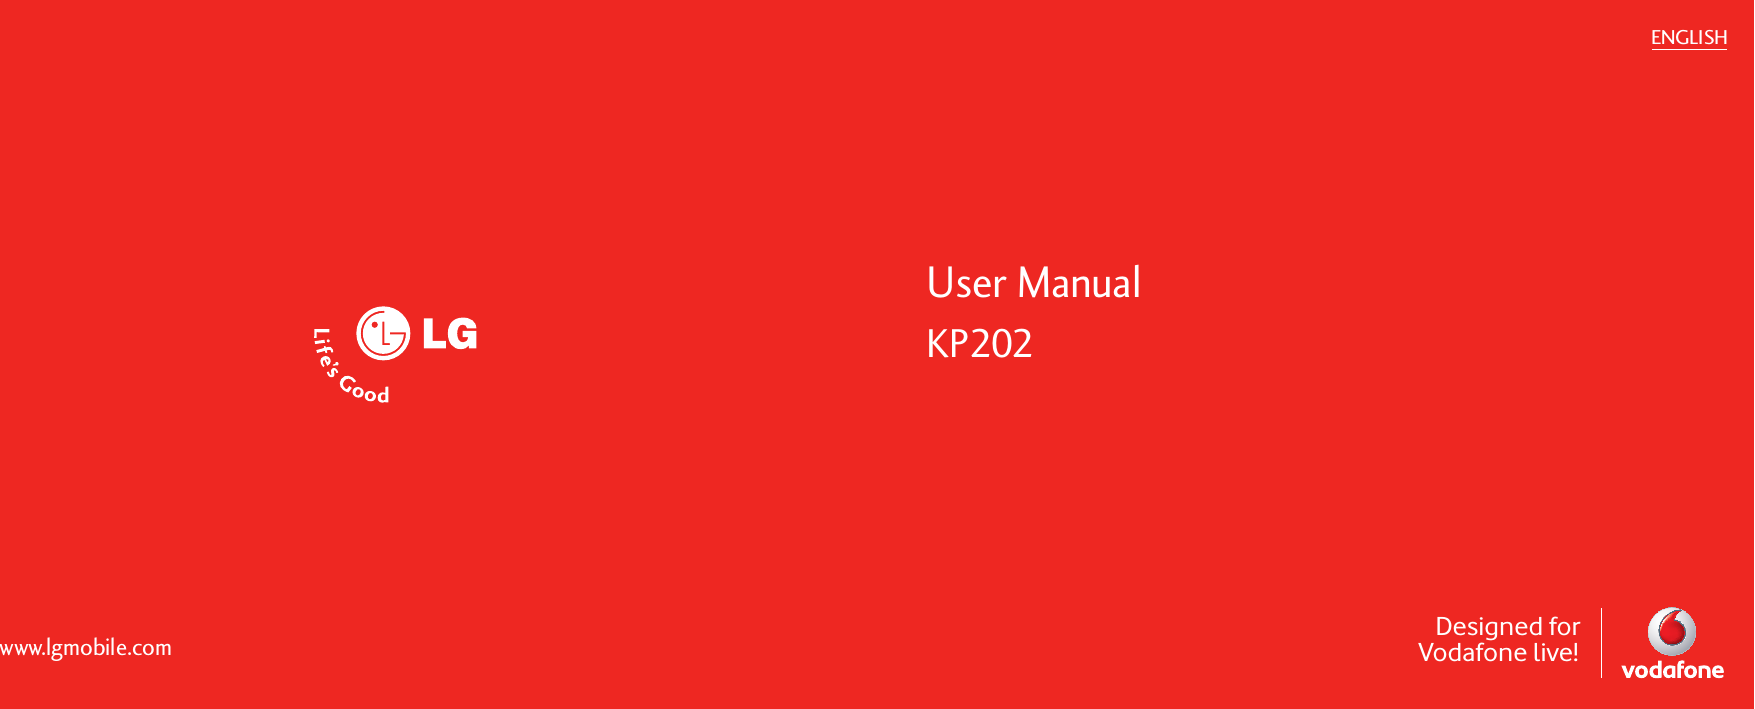 User ManualKP202Designed forVodafone live!ENGLISHwww.lgmobile.com